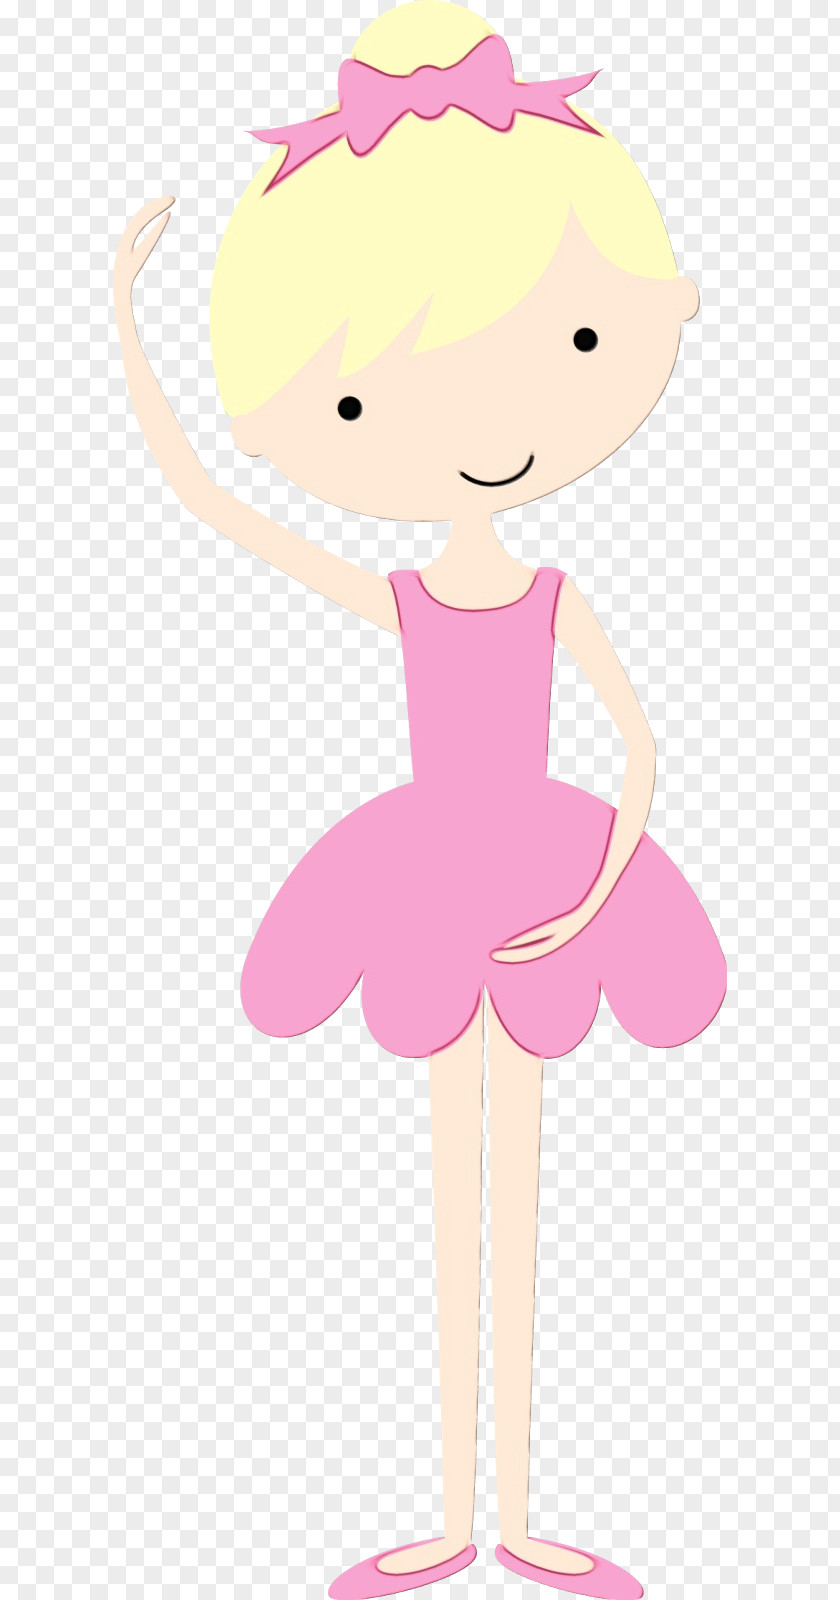 Ballet Shoe Dancer Tutu Pink Cartoon Flat PNG